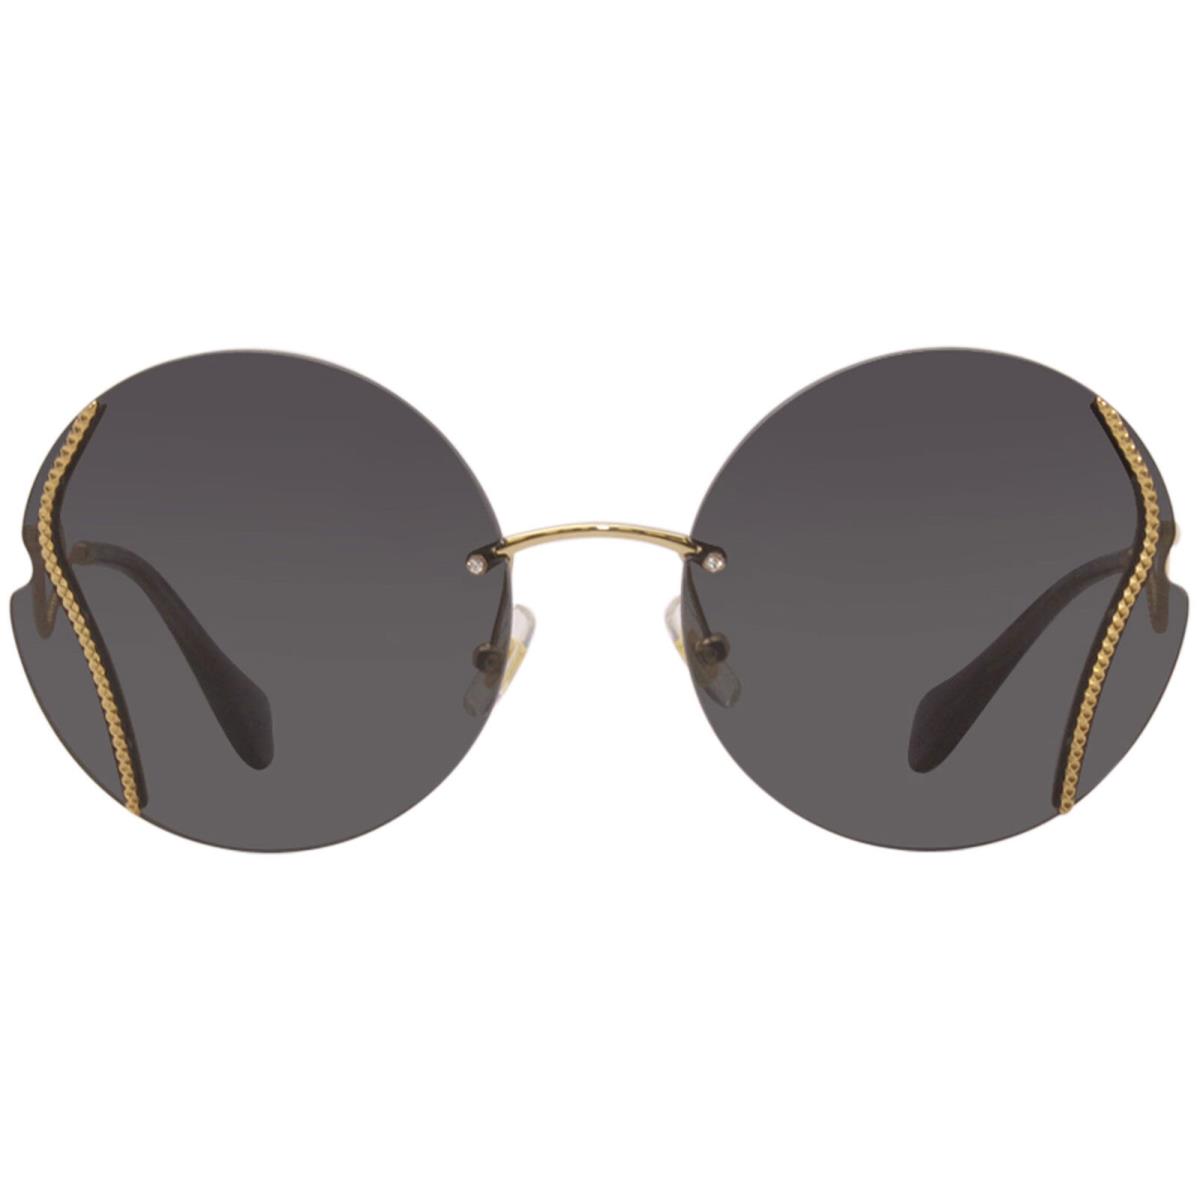 Miu Miu smu50x 7OE-5S0 Sunglasses Women`s Antique Gold/dark Grey Mirror Lenses - Frame: Gold, Lens: Gray